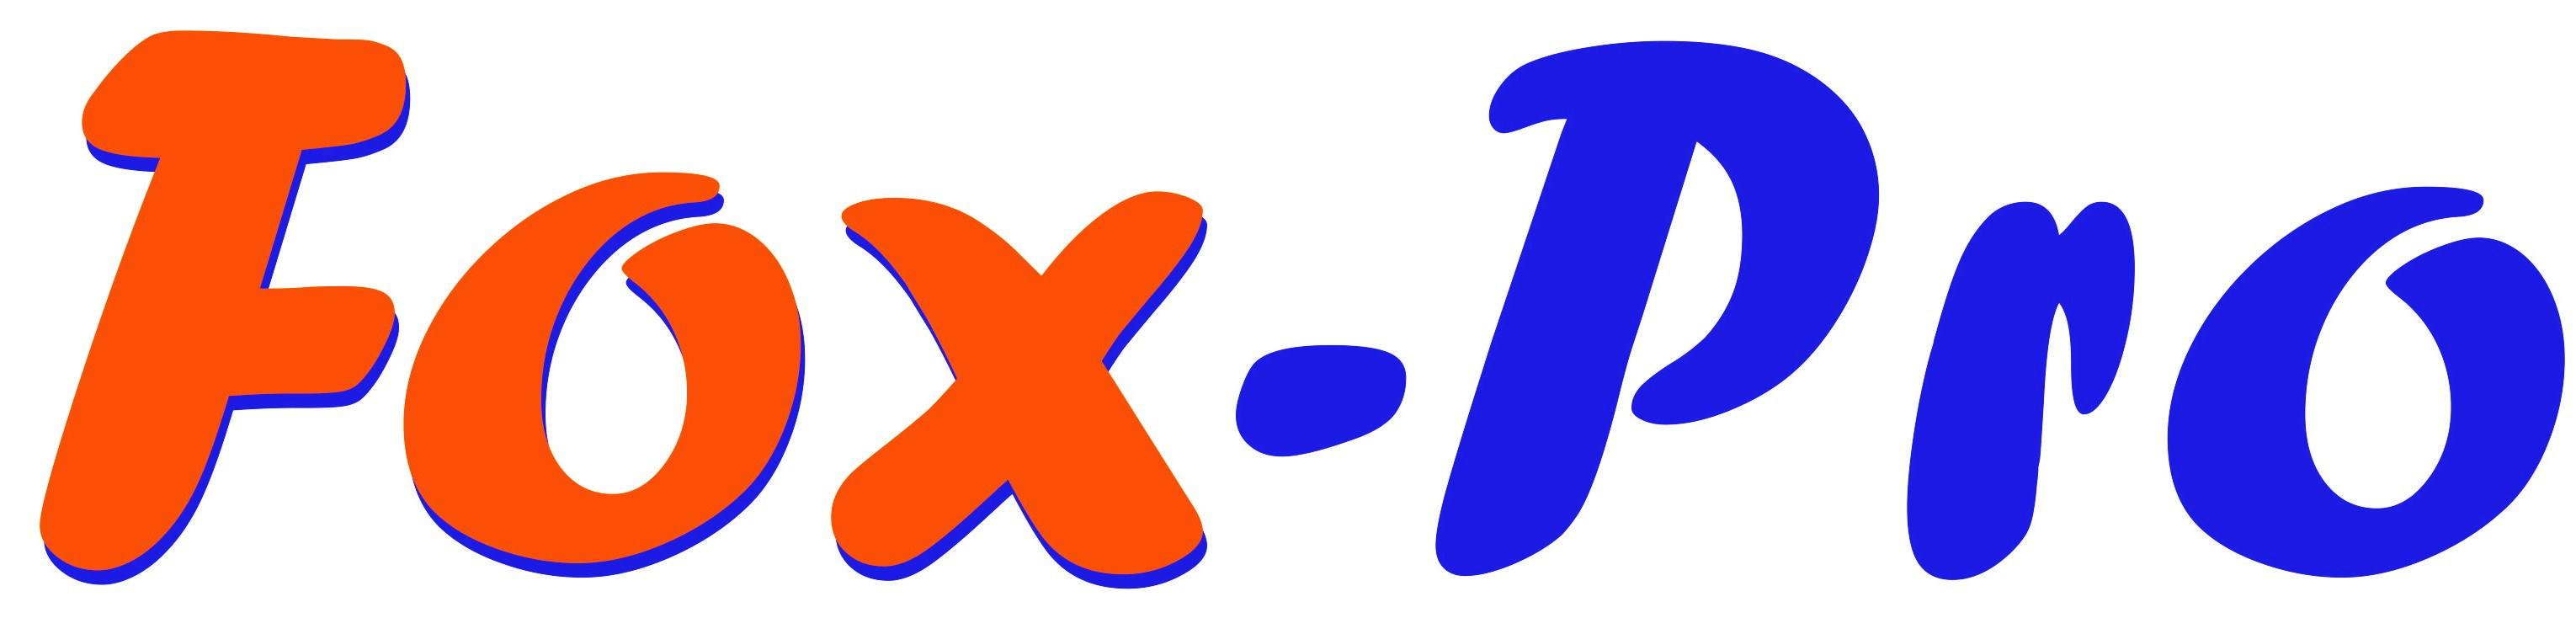 FOXPRO логотип. ООО бизнес Фокс. Fox компания